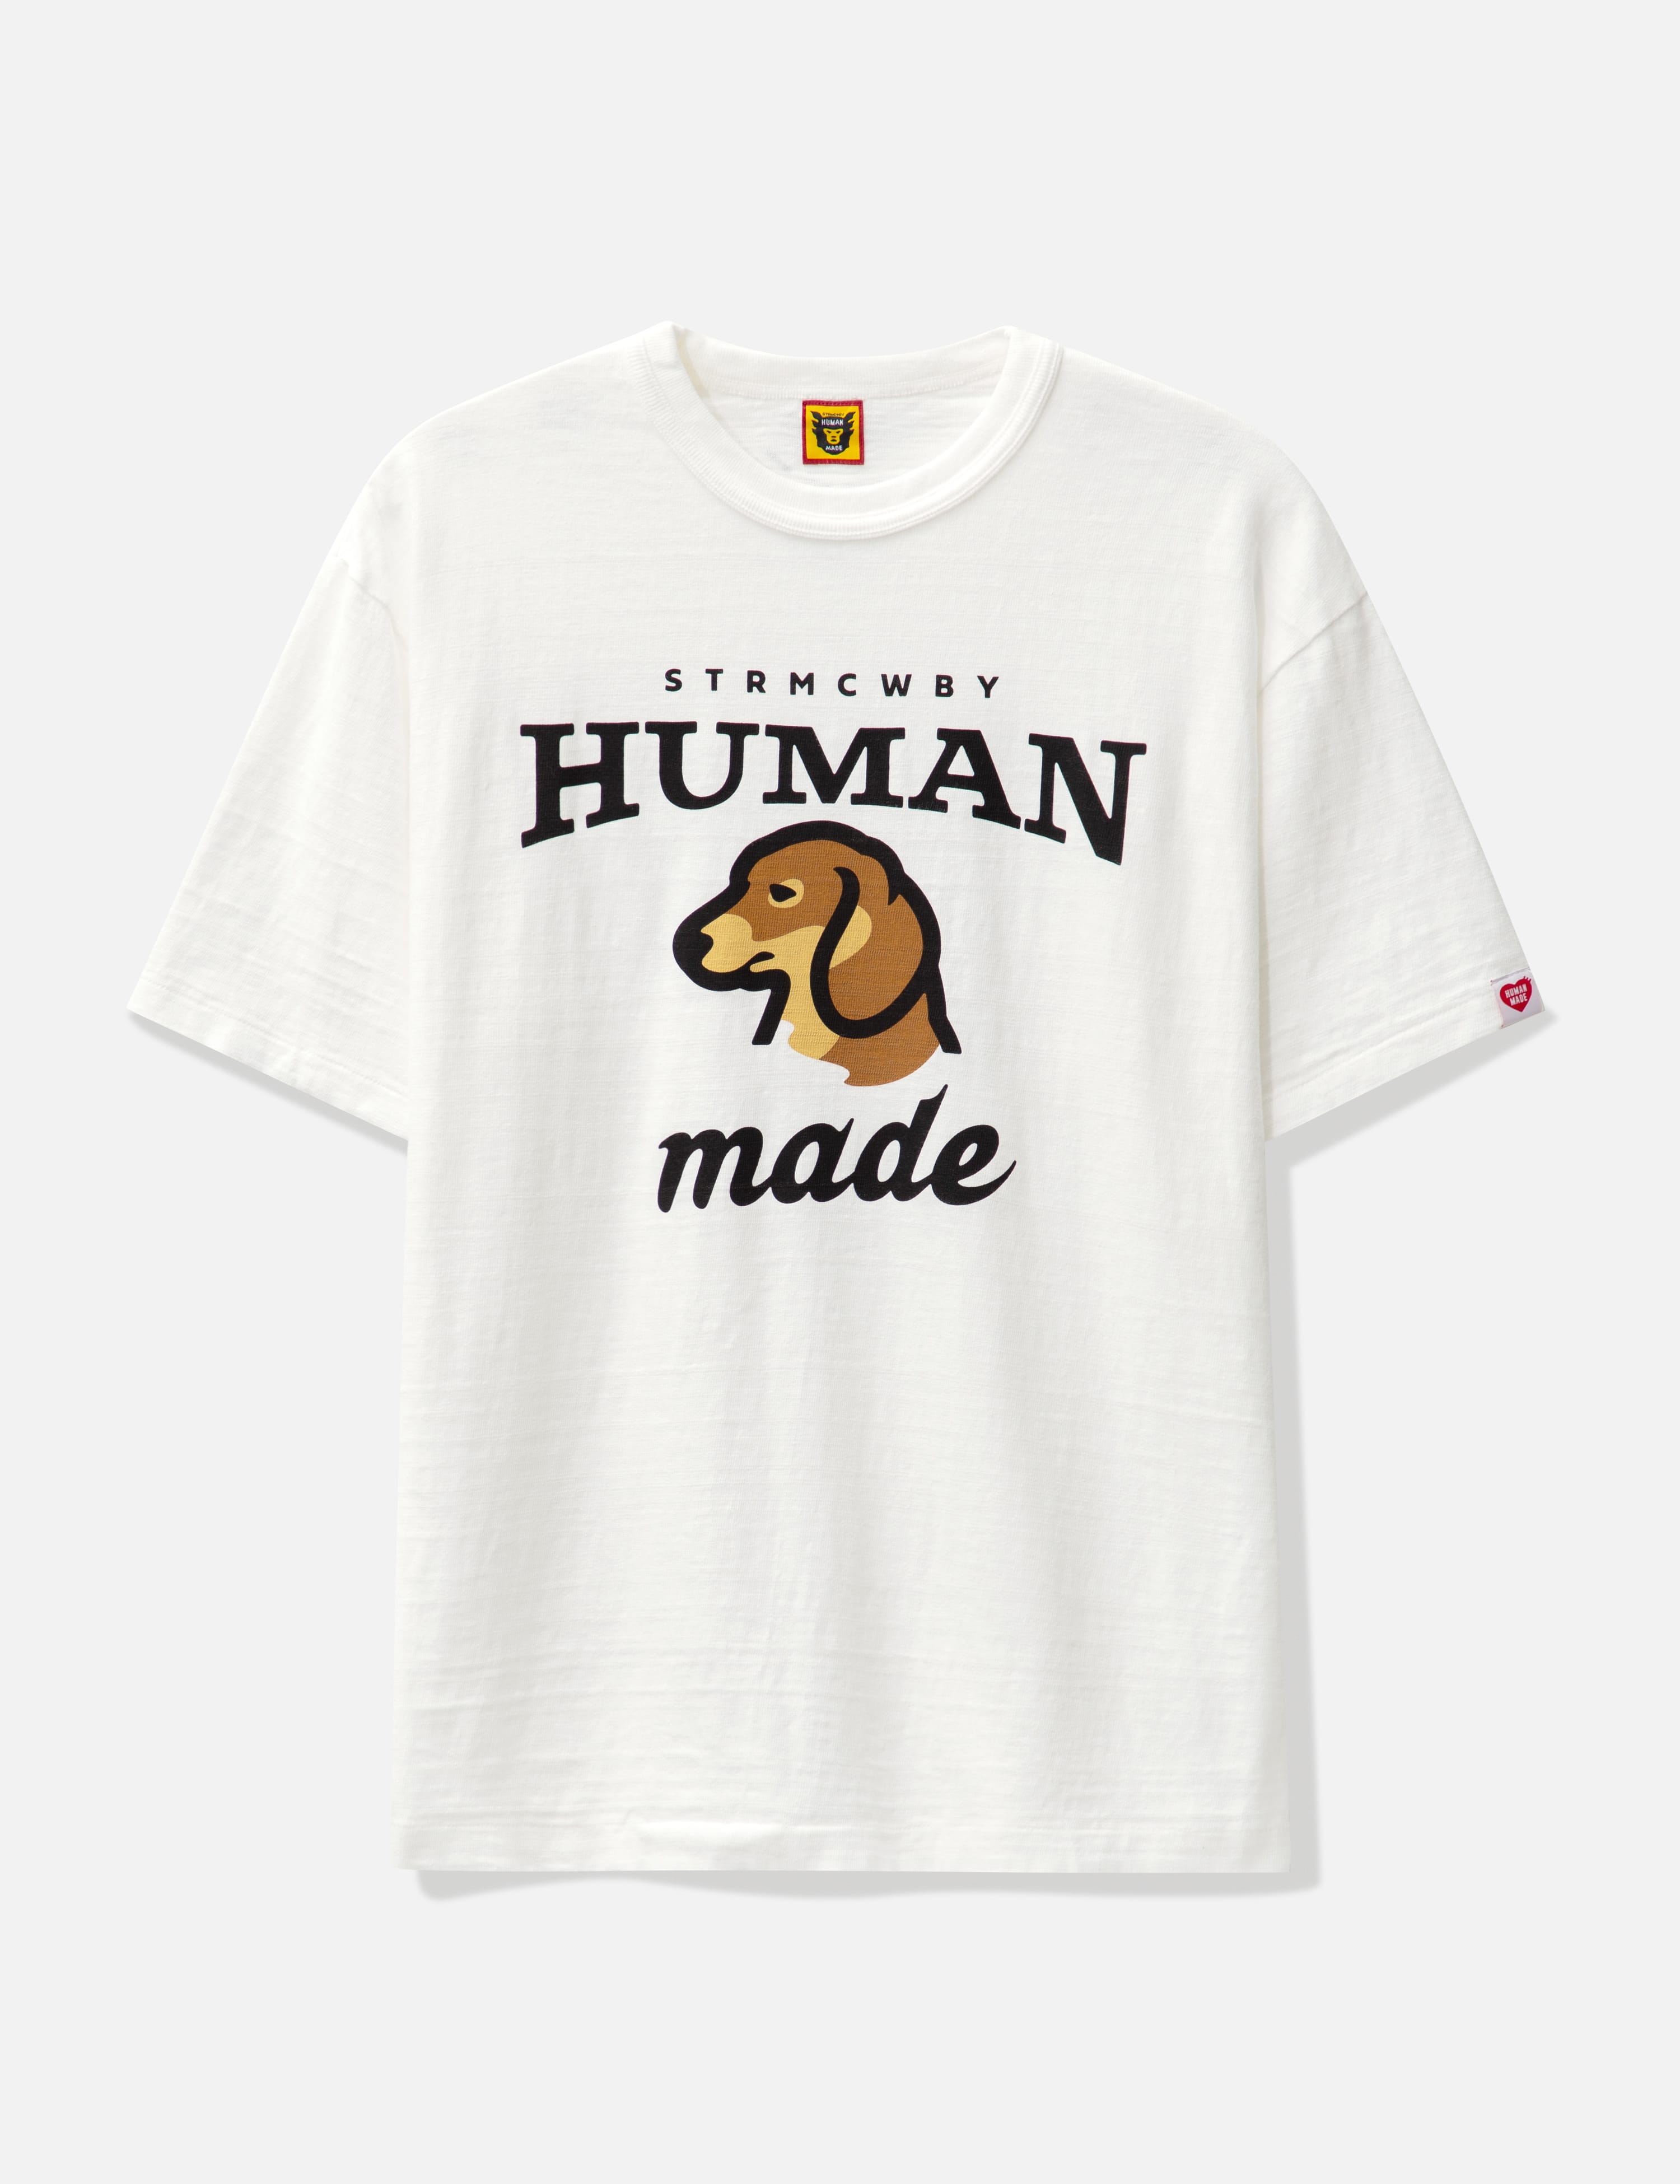 Human Made | HBX - ハイプビースト(Hypebeast)が厳選したグローバル